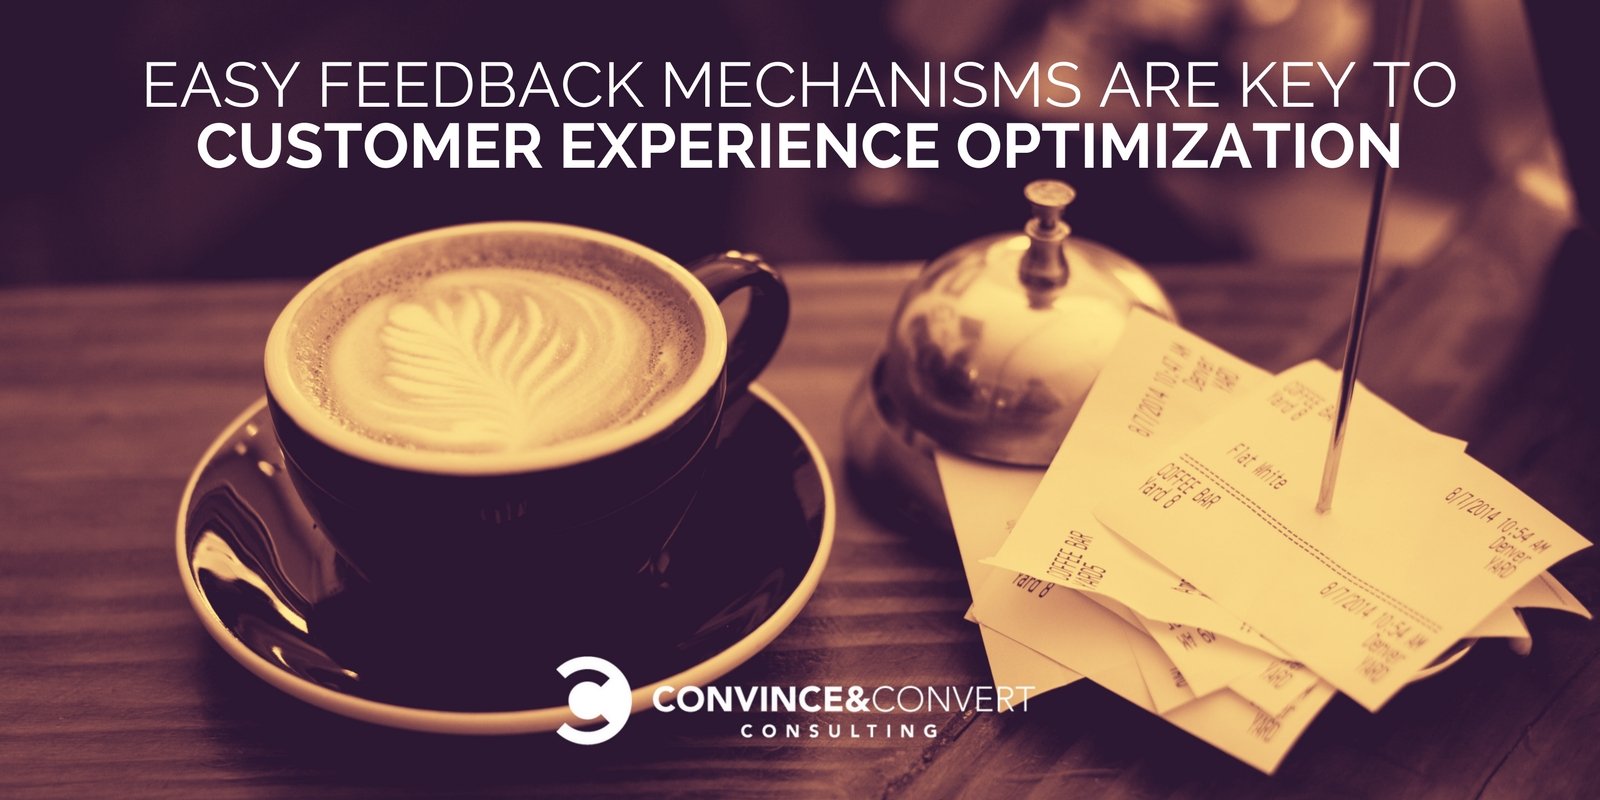 Easy Feedback Mechanisms Are Key to Customer Experience Optimization